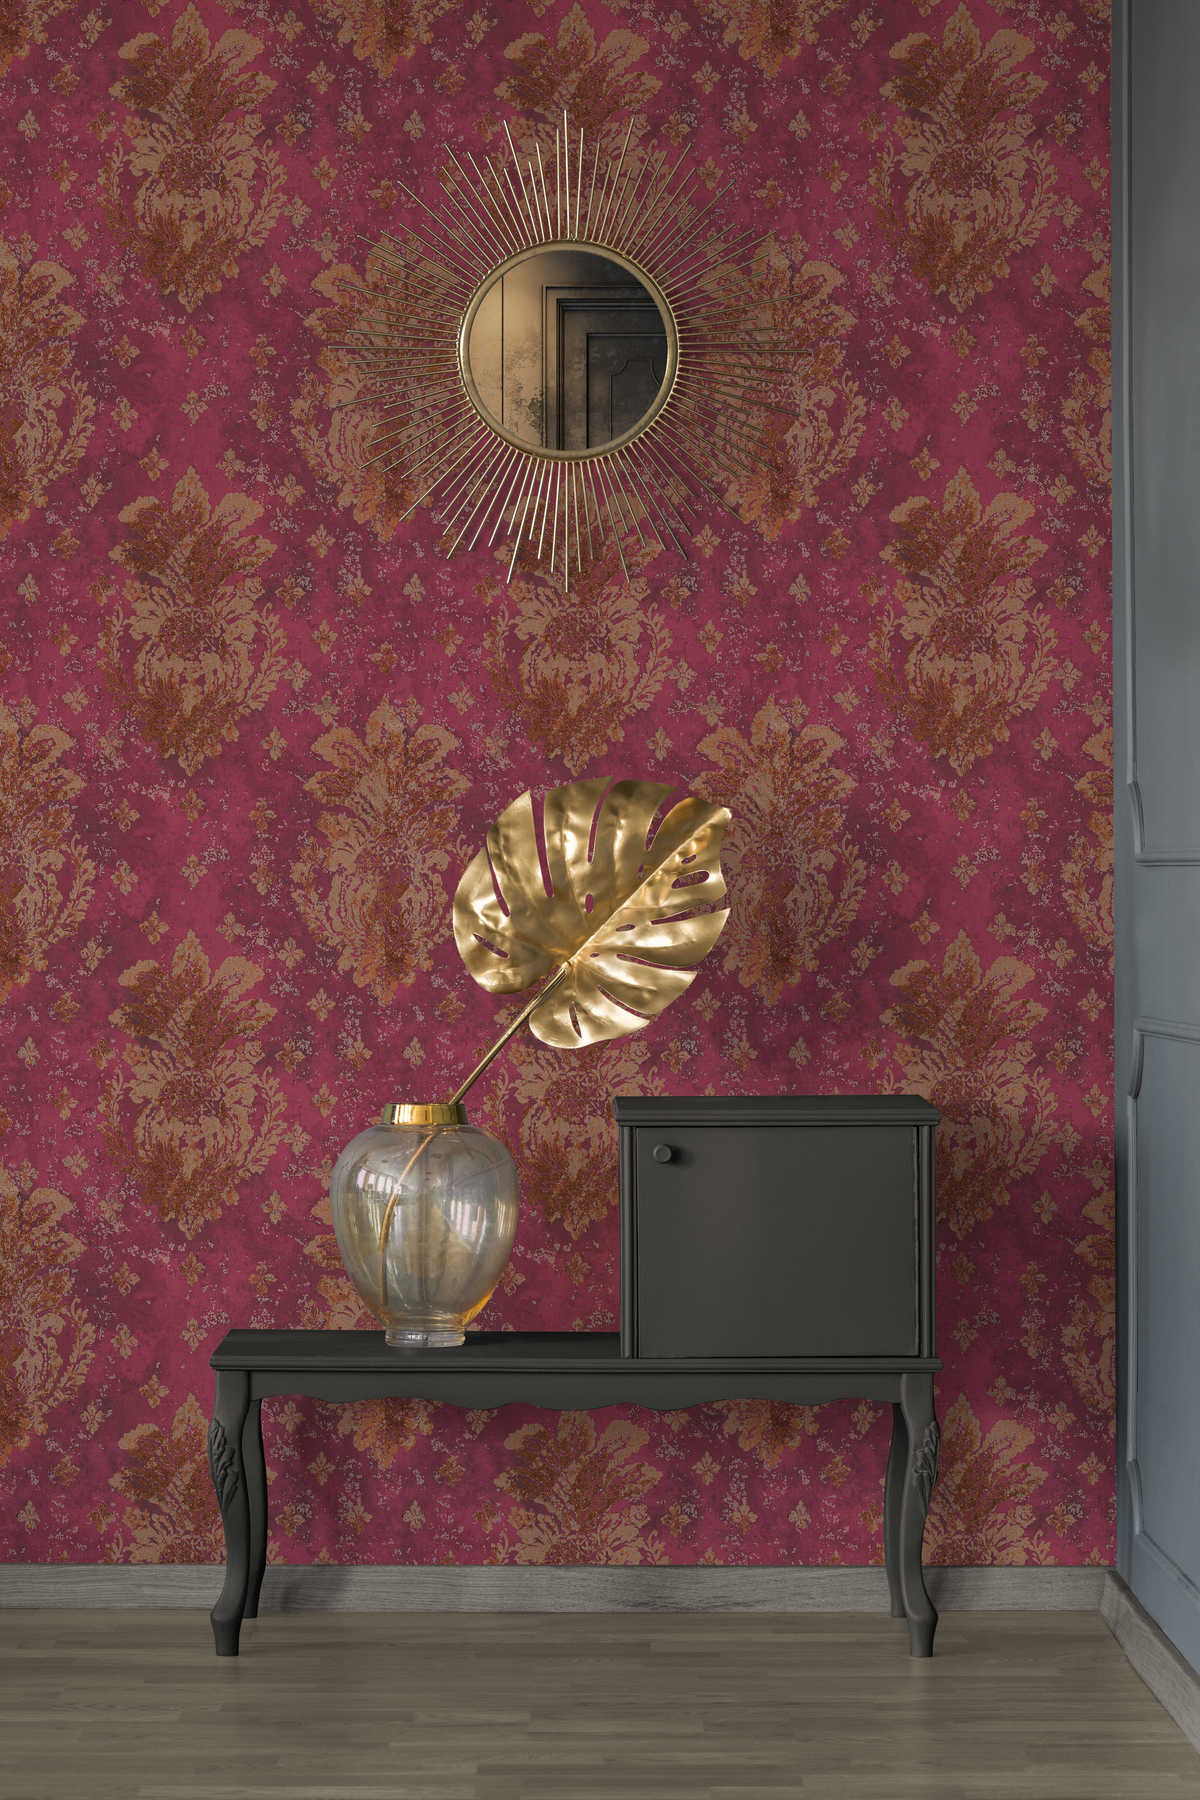             Weinrote Tapete mit Ornamenten im Boho Stil – Metallic, Rot
        